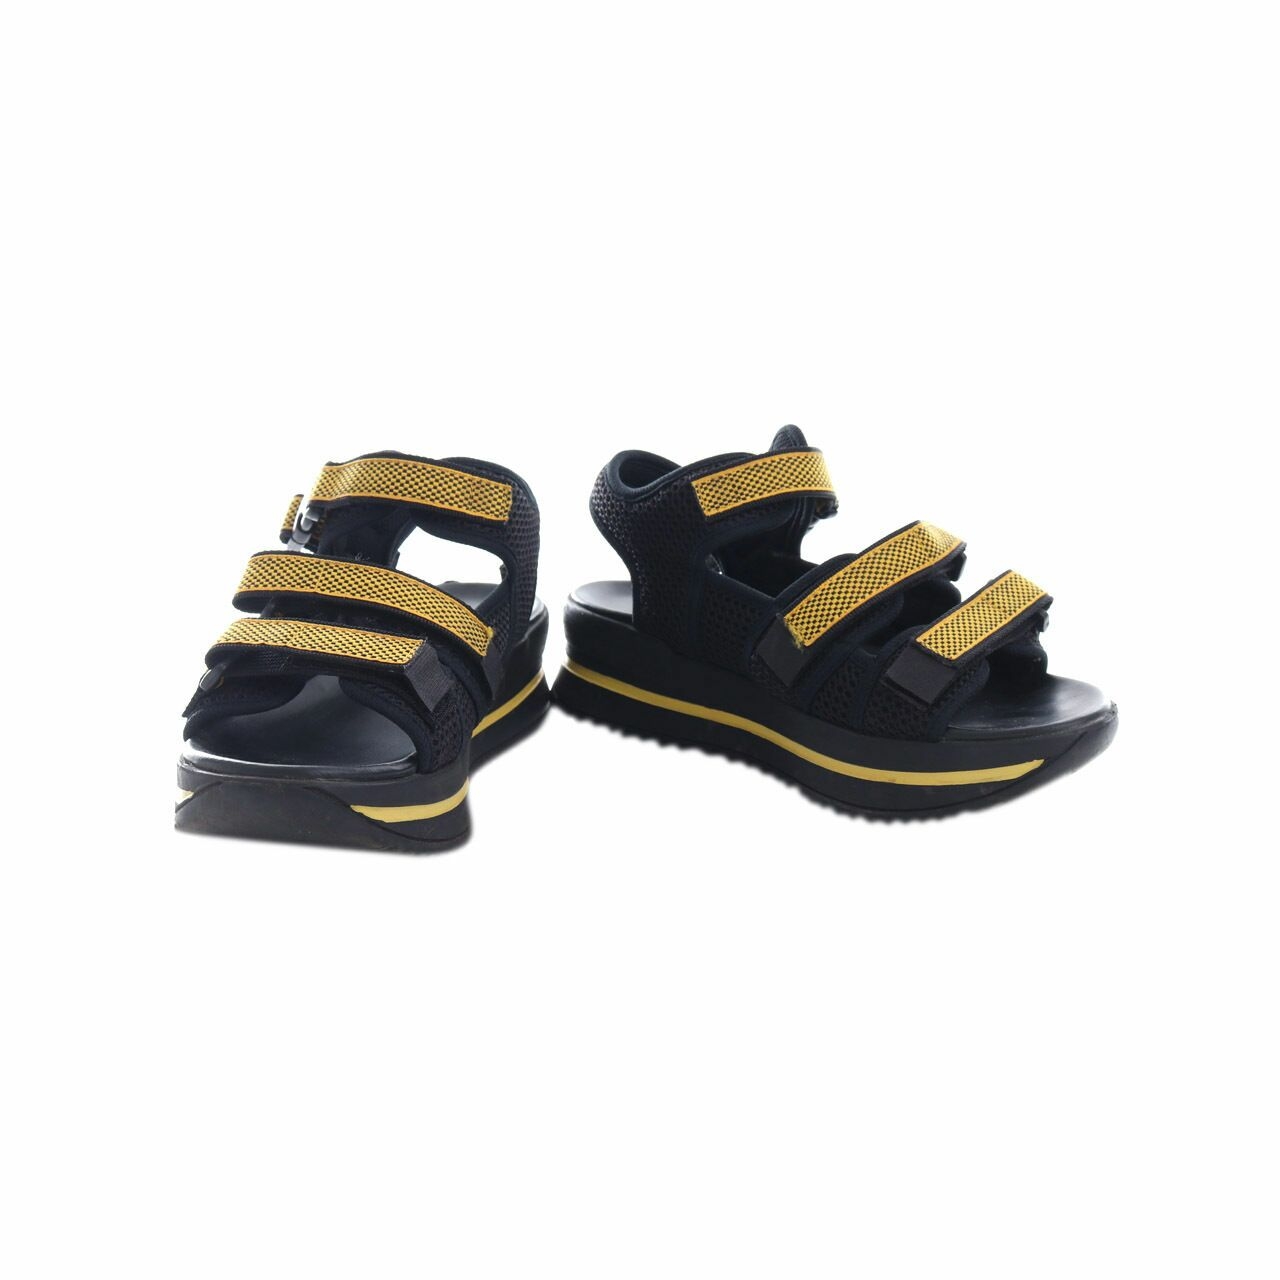 MKS Black & Yellow Sandals